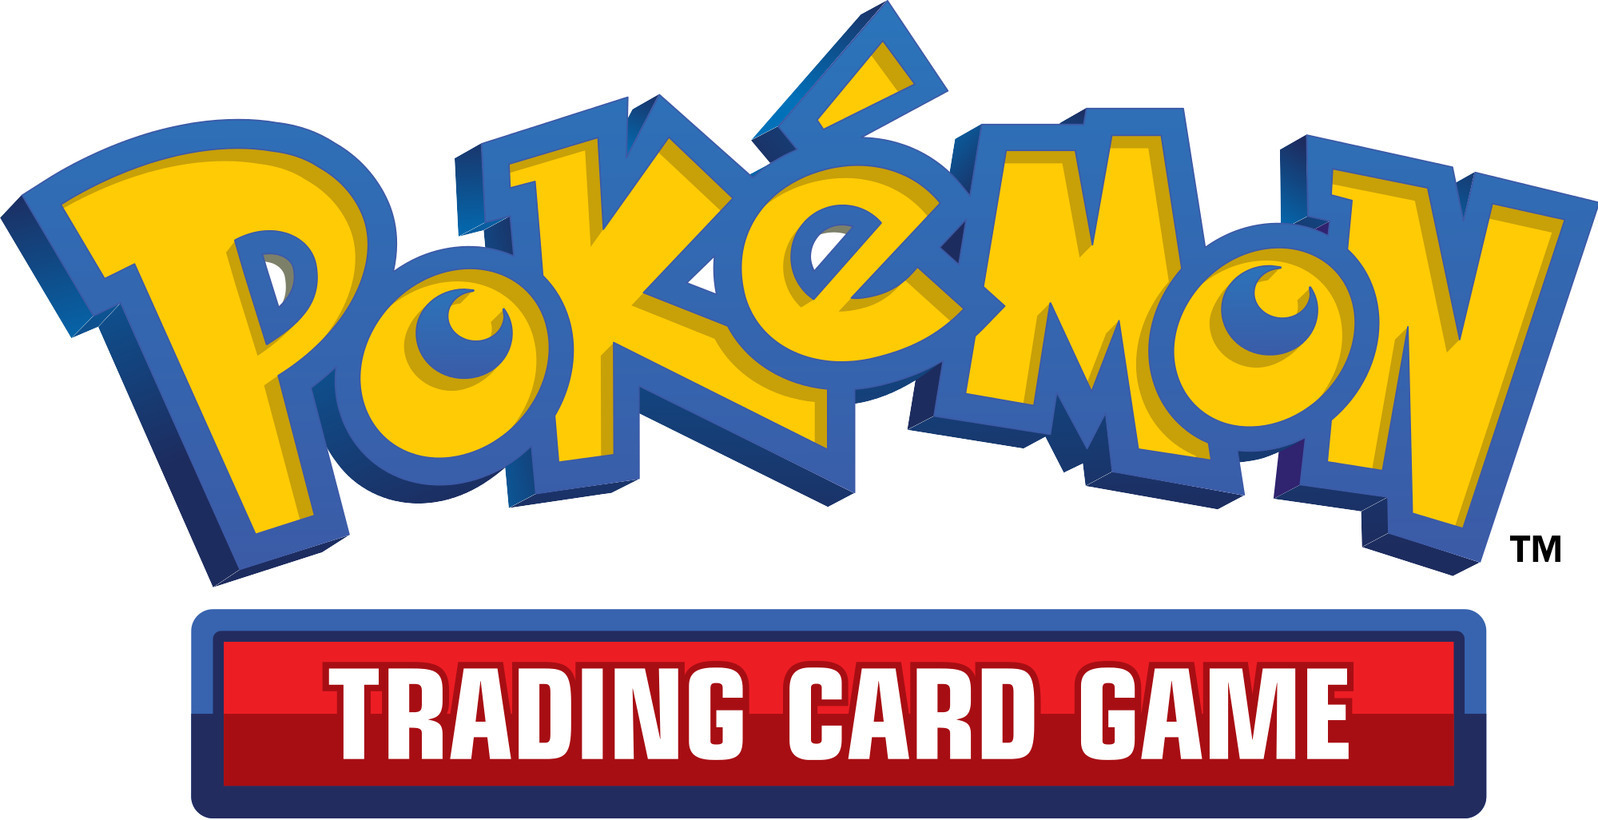 Spanish Pokemon League Battle Deck Trading Card game